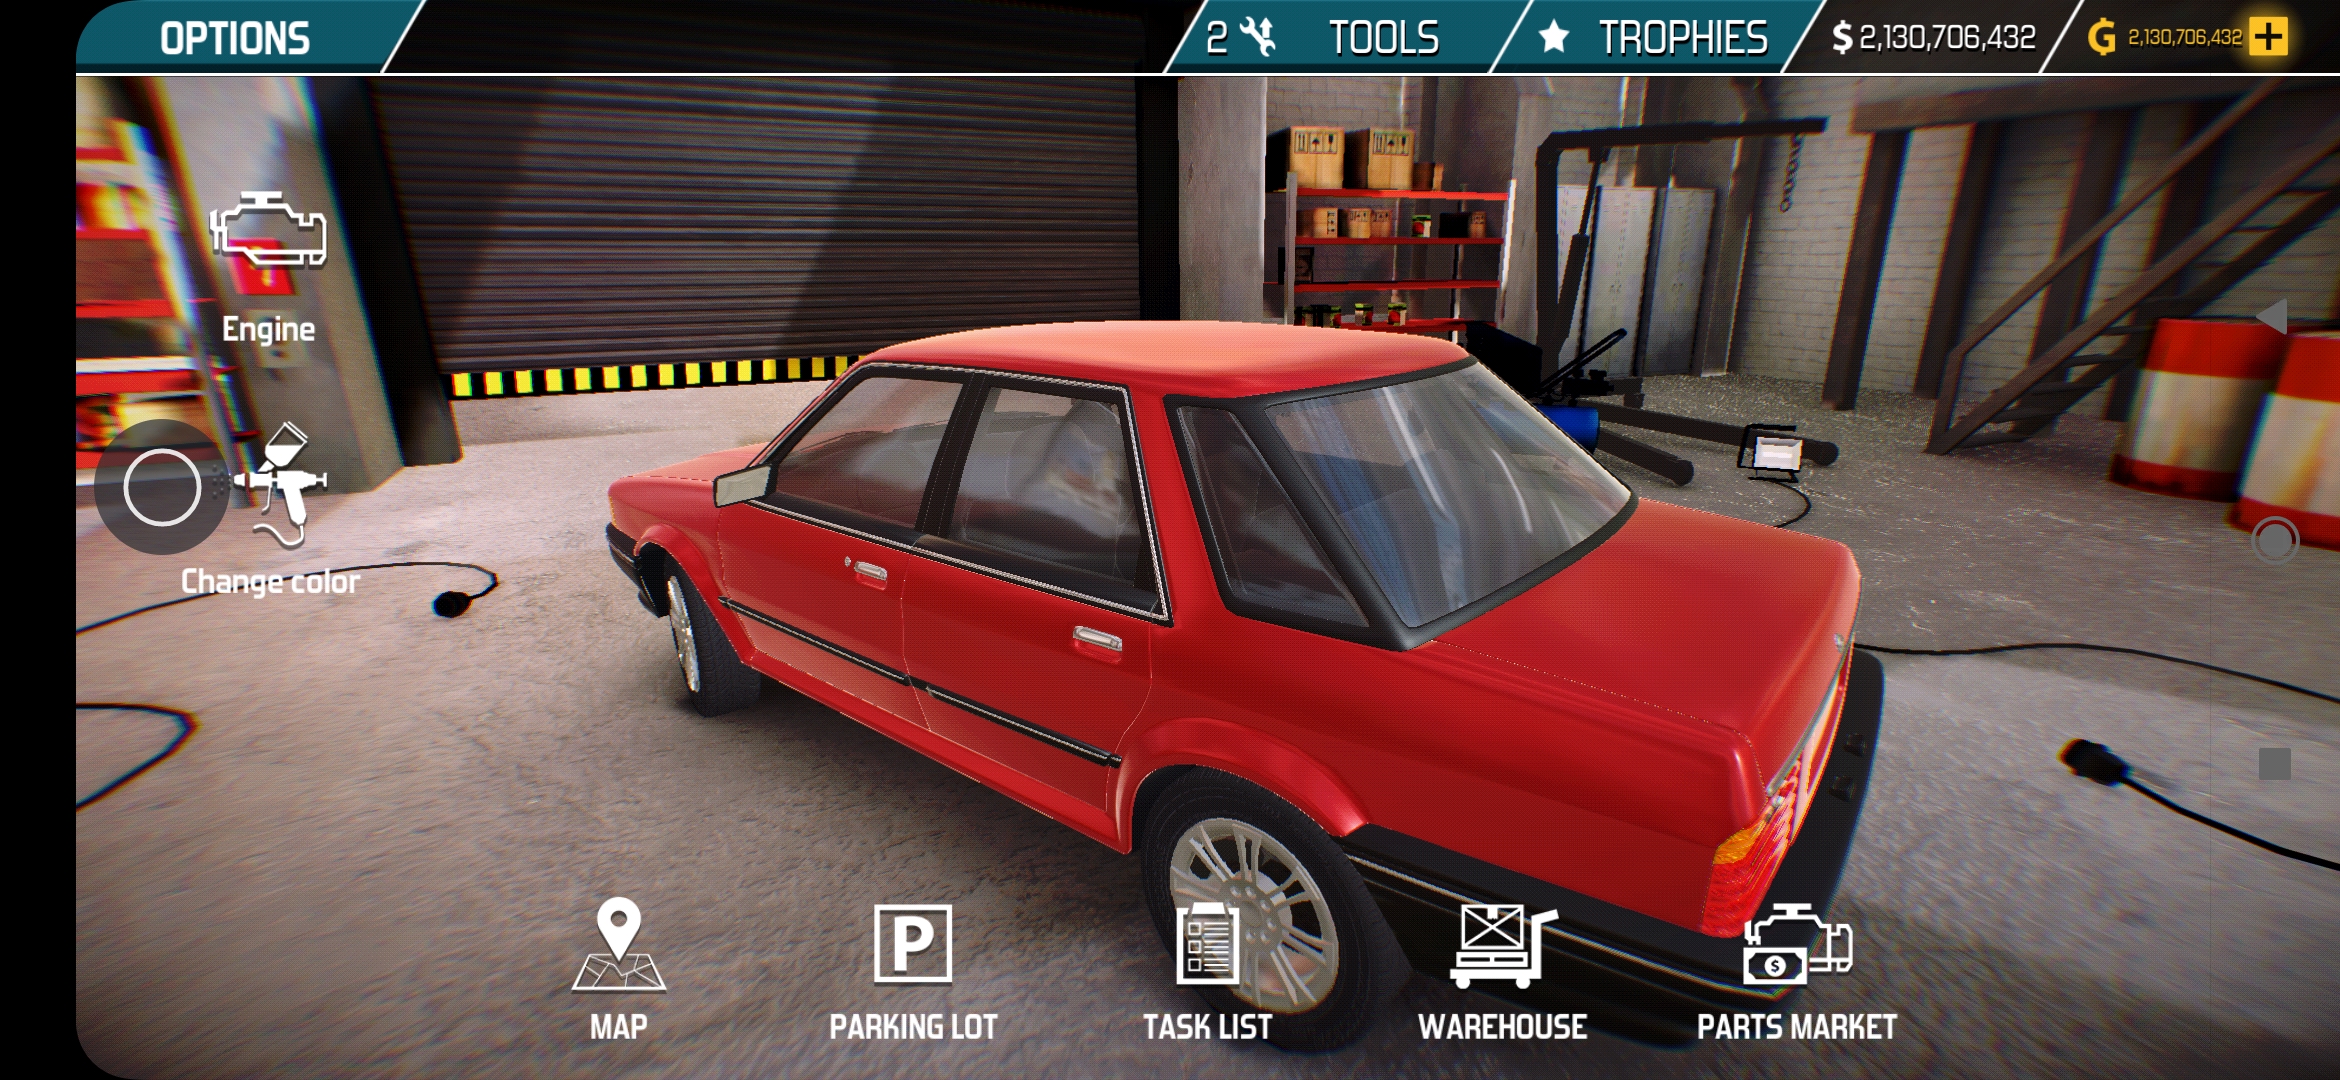 [Game Android] Car Mechanic Simulator 18